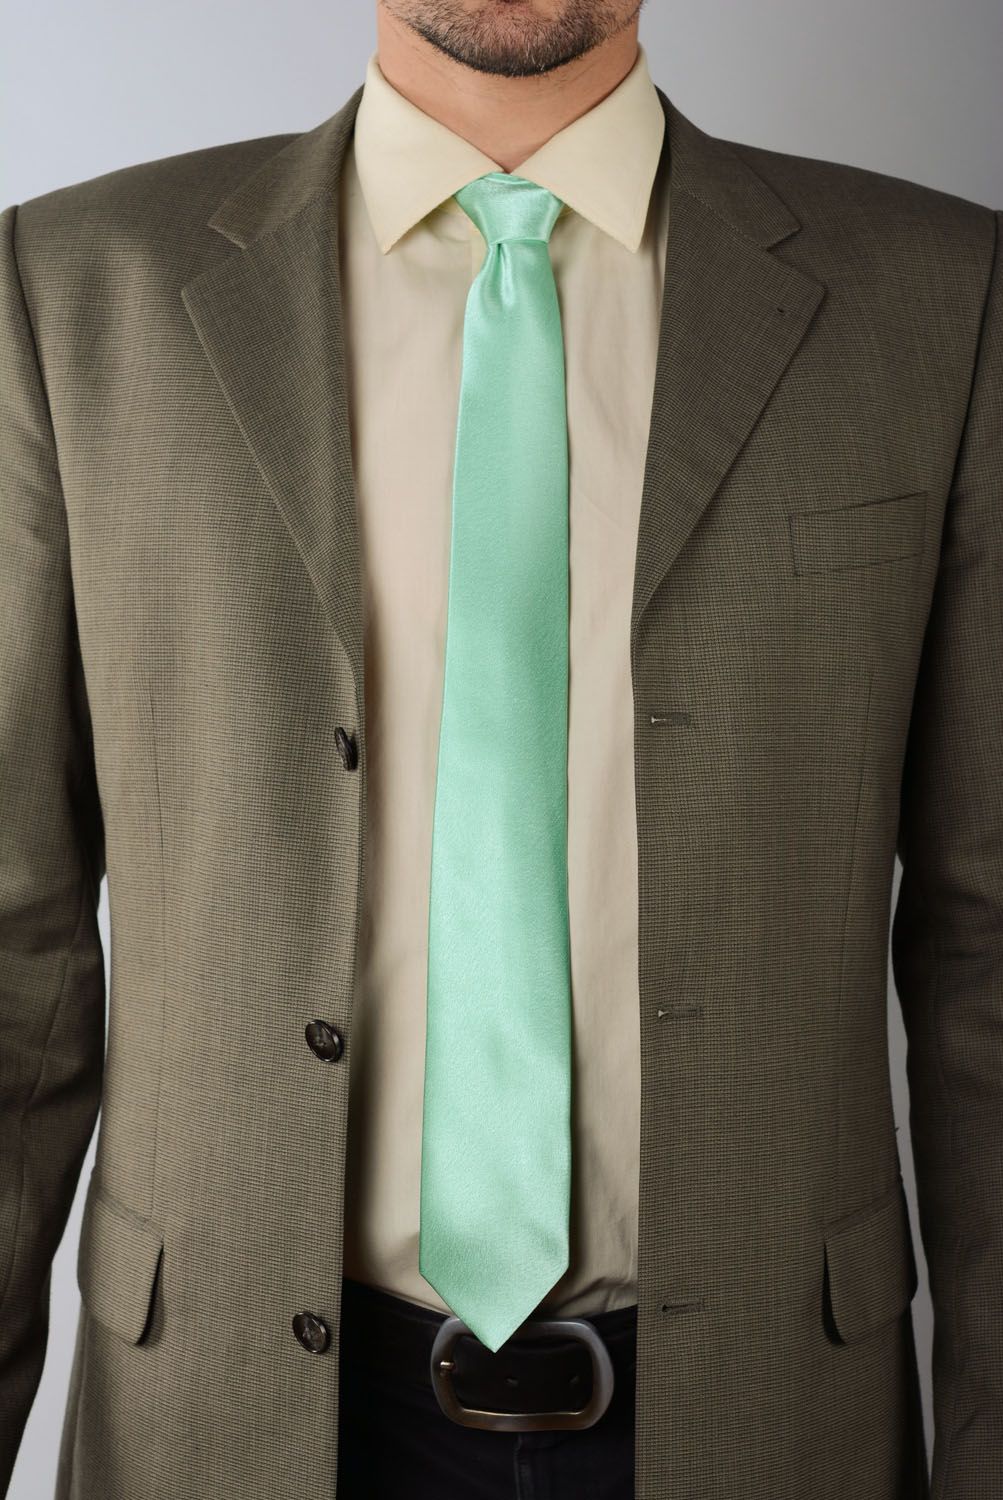 Cravate menthe en satin faite main photo 1